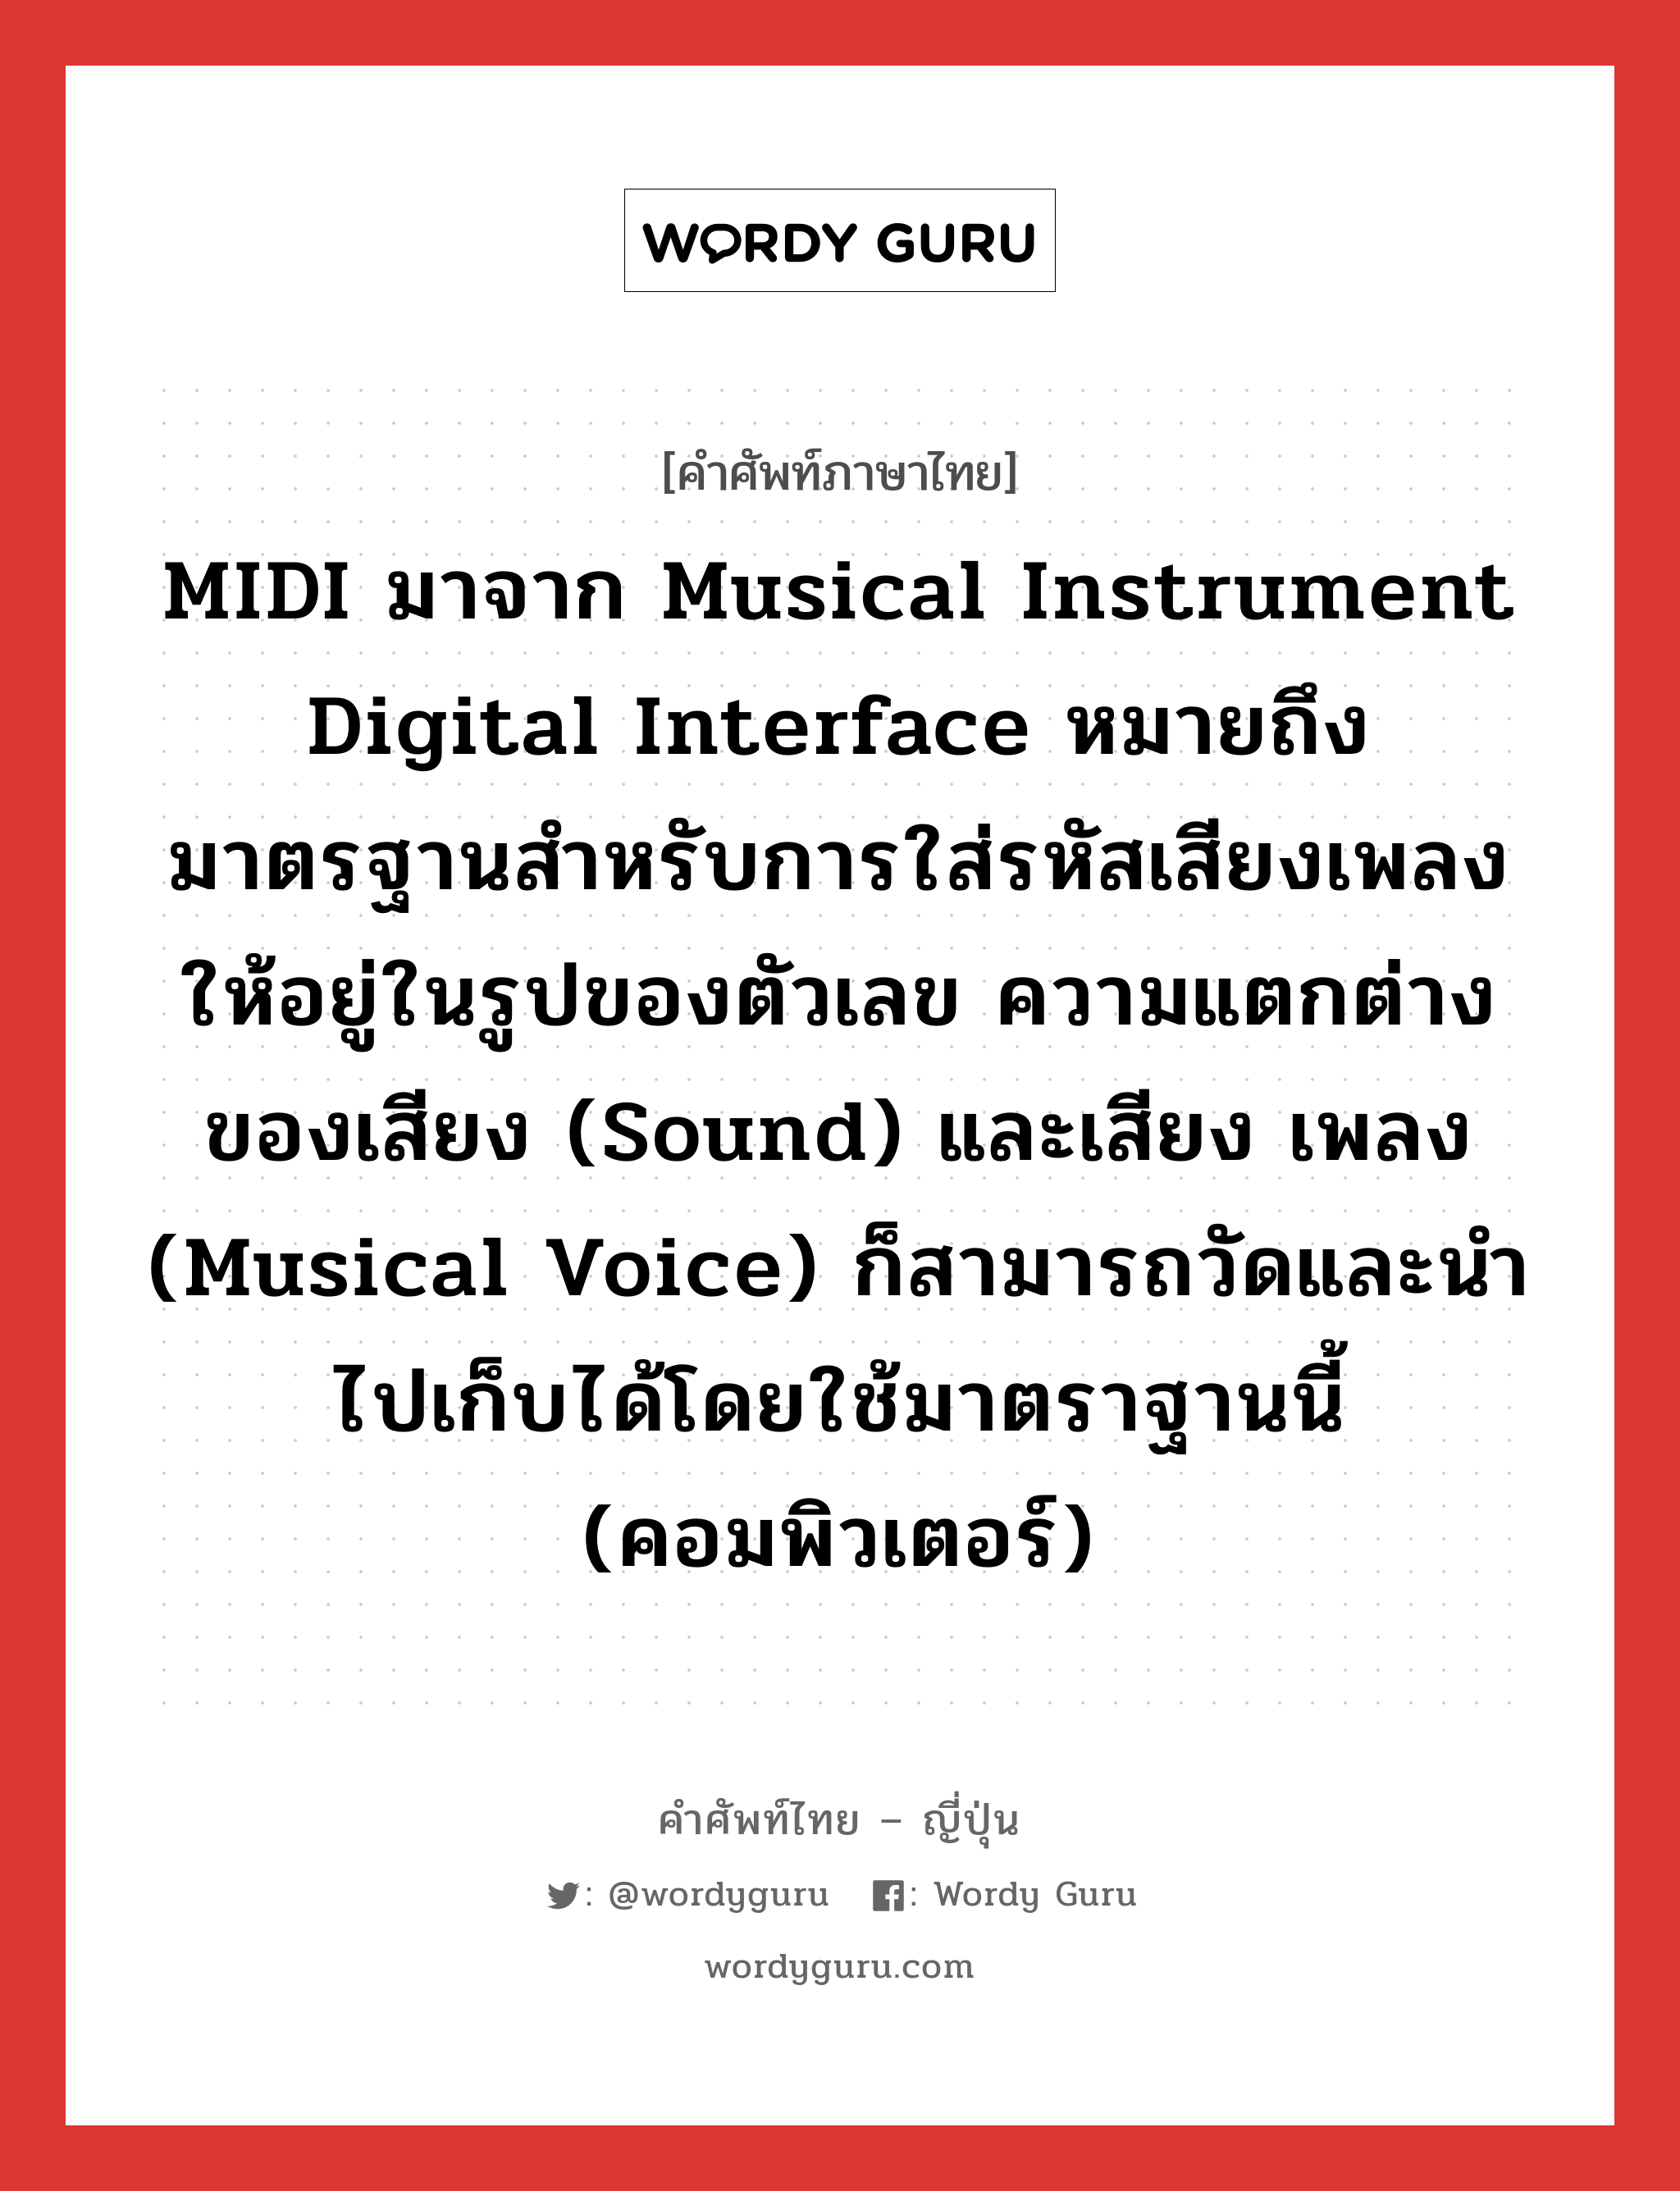 MIDI มาจาก Musical Instrument Digital Interface หมายถึง มาตรฐานสำหรับการใส่รหัสเสียงเพลงให้อยู่ในรูปของตัวเลข ความแตกต่างของเสียง (sound) และเสียง เพลง (musical voice) ก็สามารถวัดและนำไปเก็บได้โดยใช้มาตราฐานนี้ (คอมพิวเตอร์) ภาษาญี่ปุ่นคืออะไร, คำศัพท์ภาษาไทย - ญี่ปุ่น MIDI มาจาก Musical Instrument Digital Interface หมายถึง มาตรฐานสำหรับการใส่รหัสเสียงเพลงให้อยู่ในรูปของตัวเลข ความแตกต่างของเสียง (sound) และเสียง เพลง (musical voice) ก็สามารถวัดและนำไปเก็บได้โดยใช้มาตราฐานนี้ (คอมพิวเตอร์) ภาษาญี่ปุ่น ミディ คำอ่านภาษาญี่ปุ่น ミディ หมวด n หมวด n